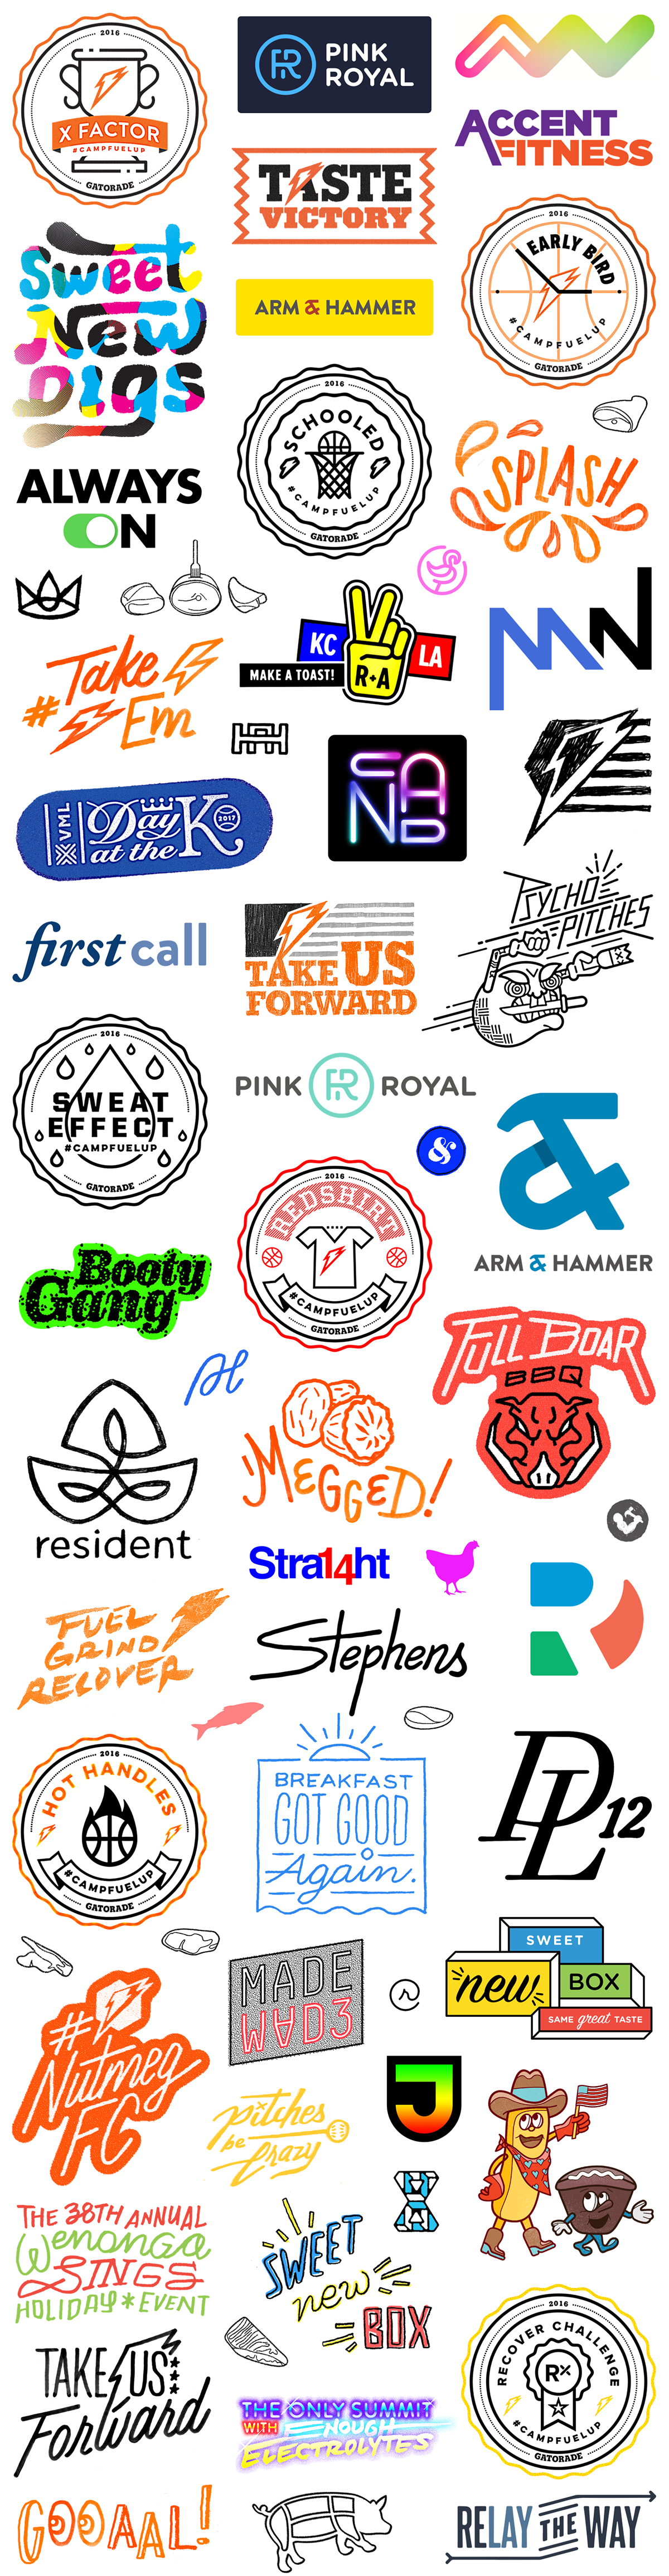 gatorade logos icons ILLUSTRATION  sports lockups Badges vintage hostess typography  